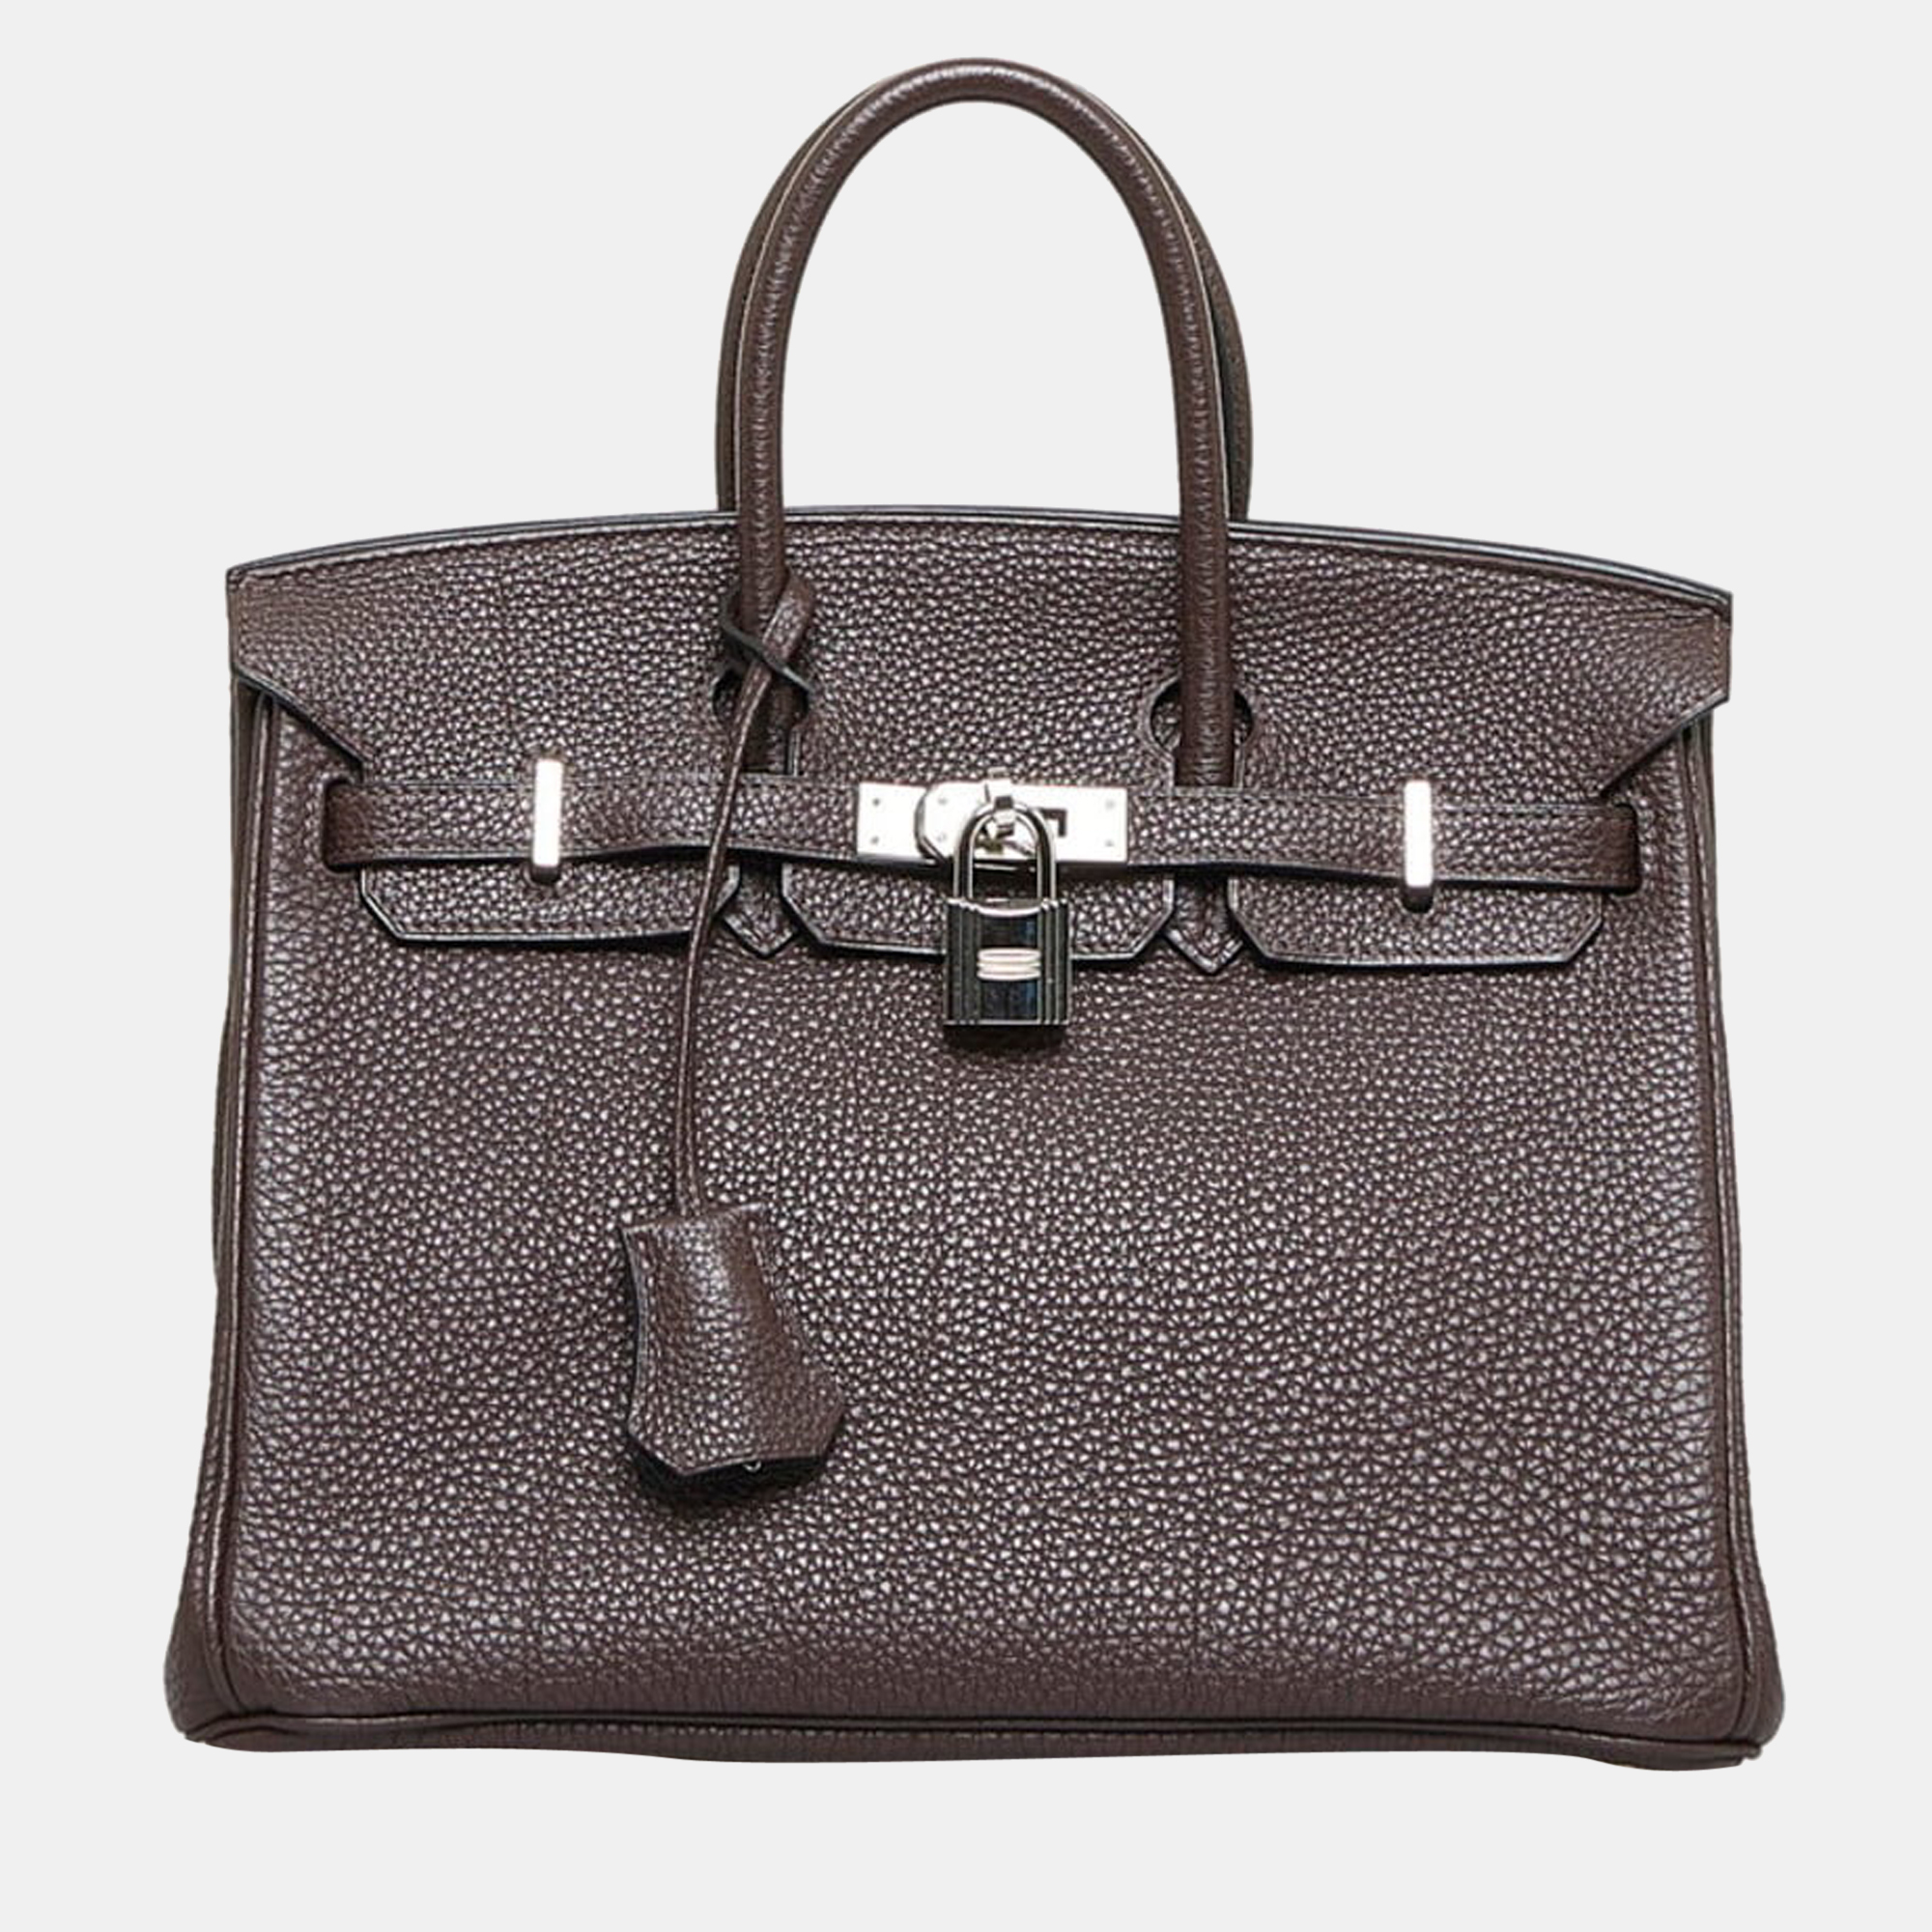 Hermes Birkin 25 Handbag 401328 Chocolate Brown Togo Women's